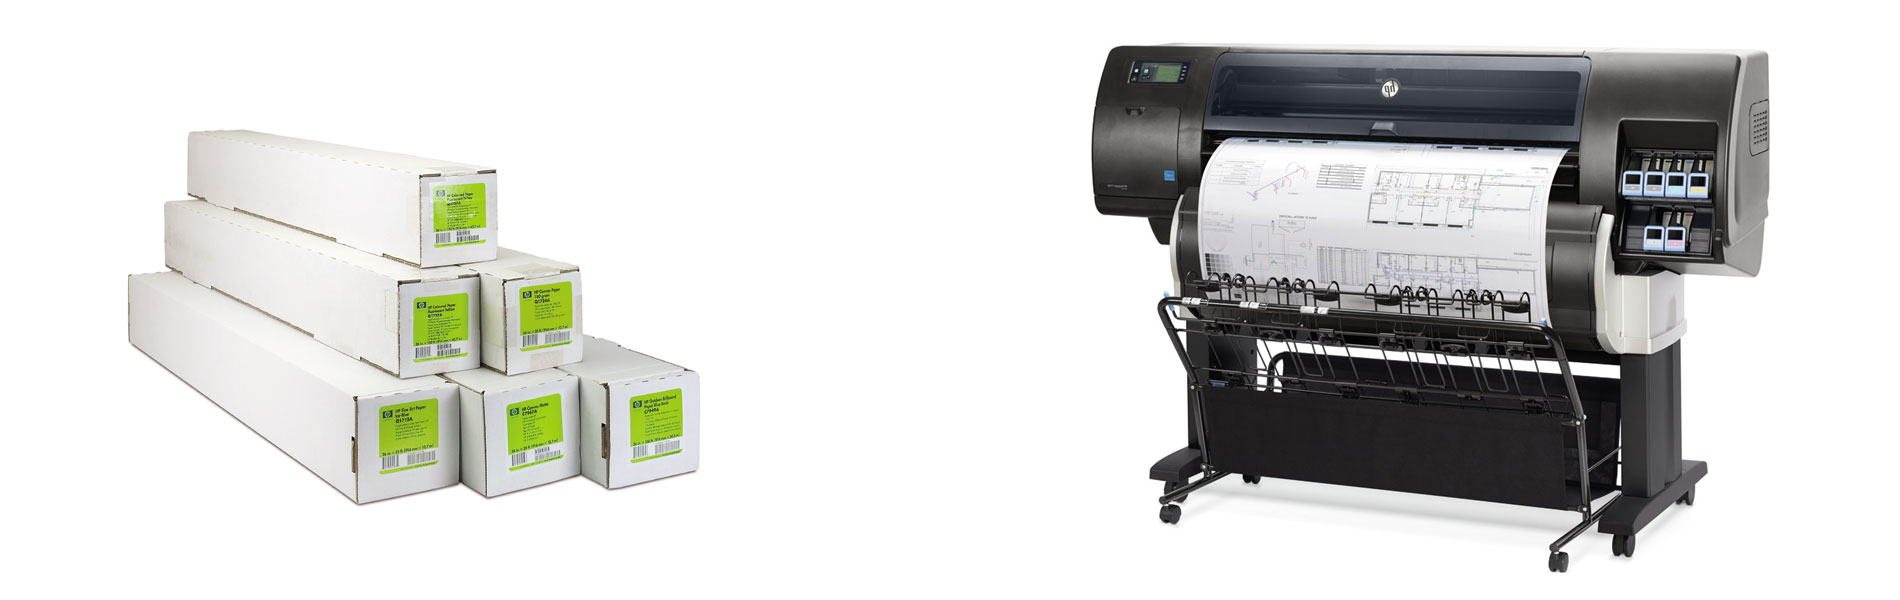 Media for Large Format Printers